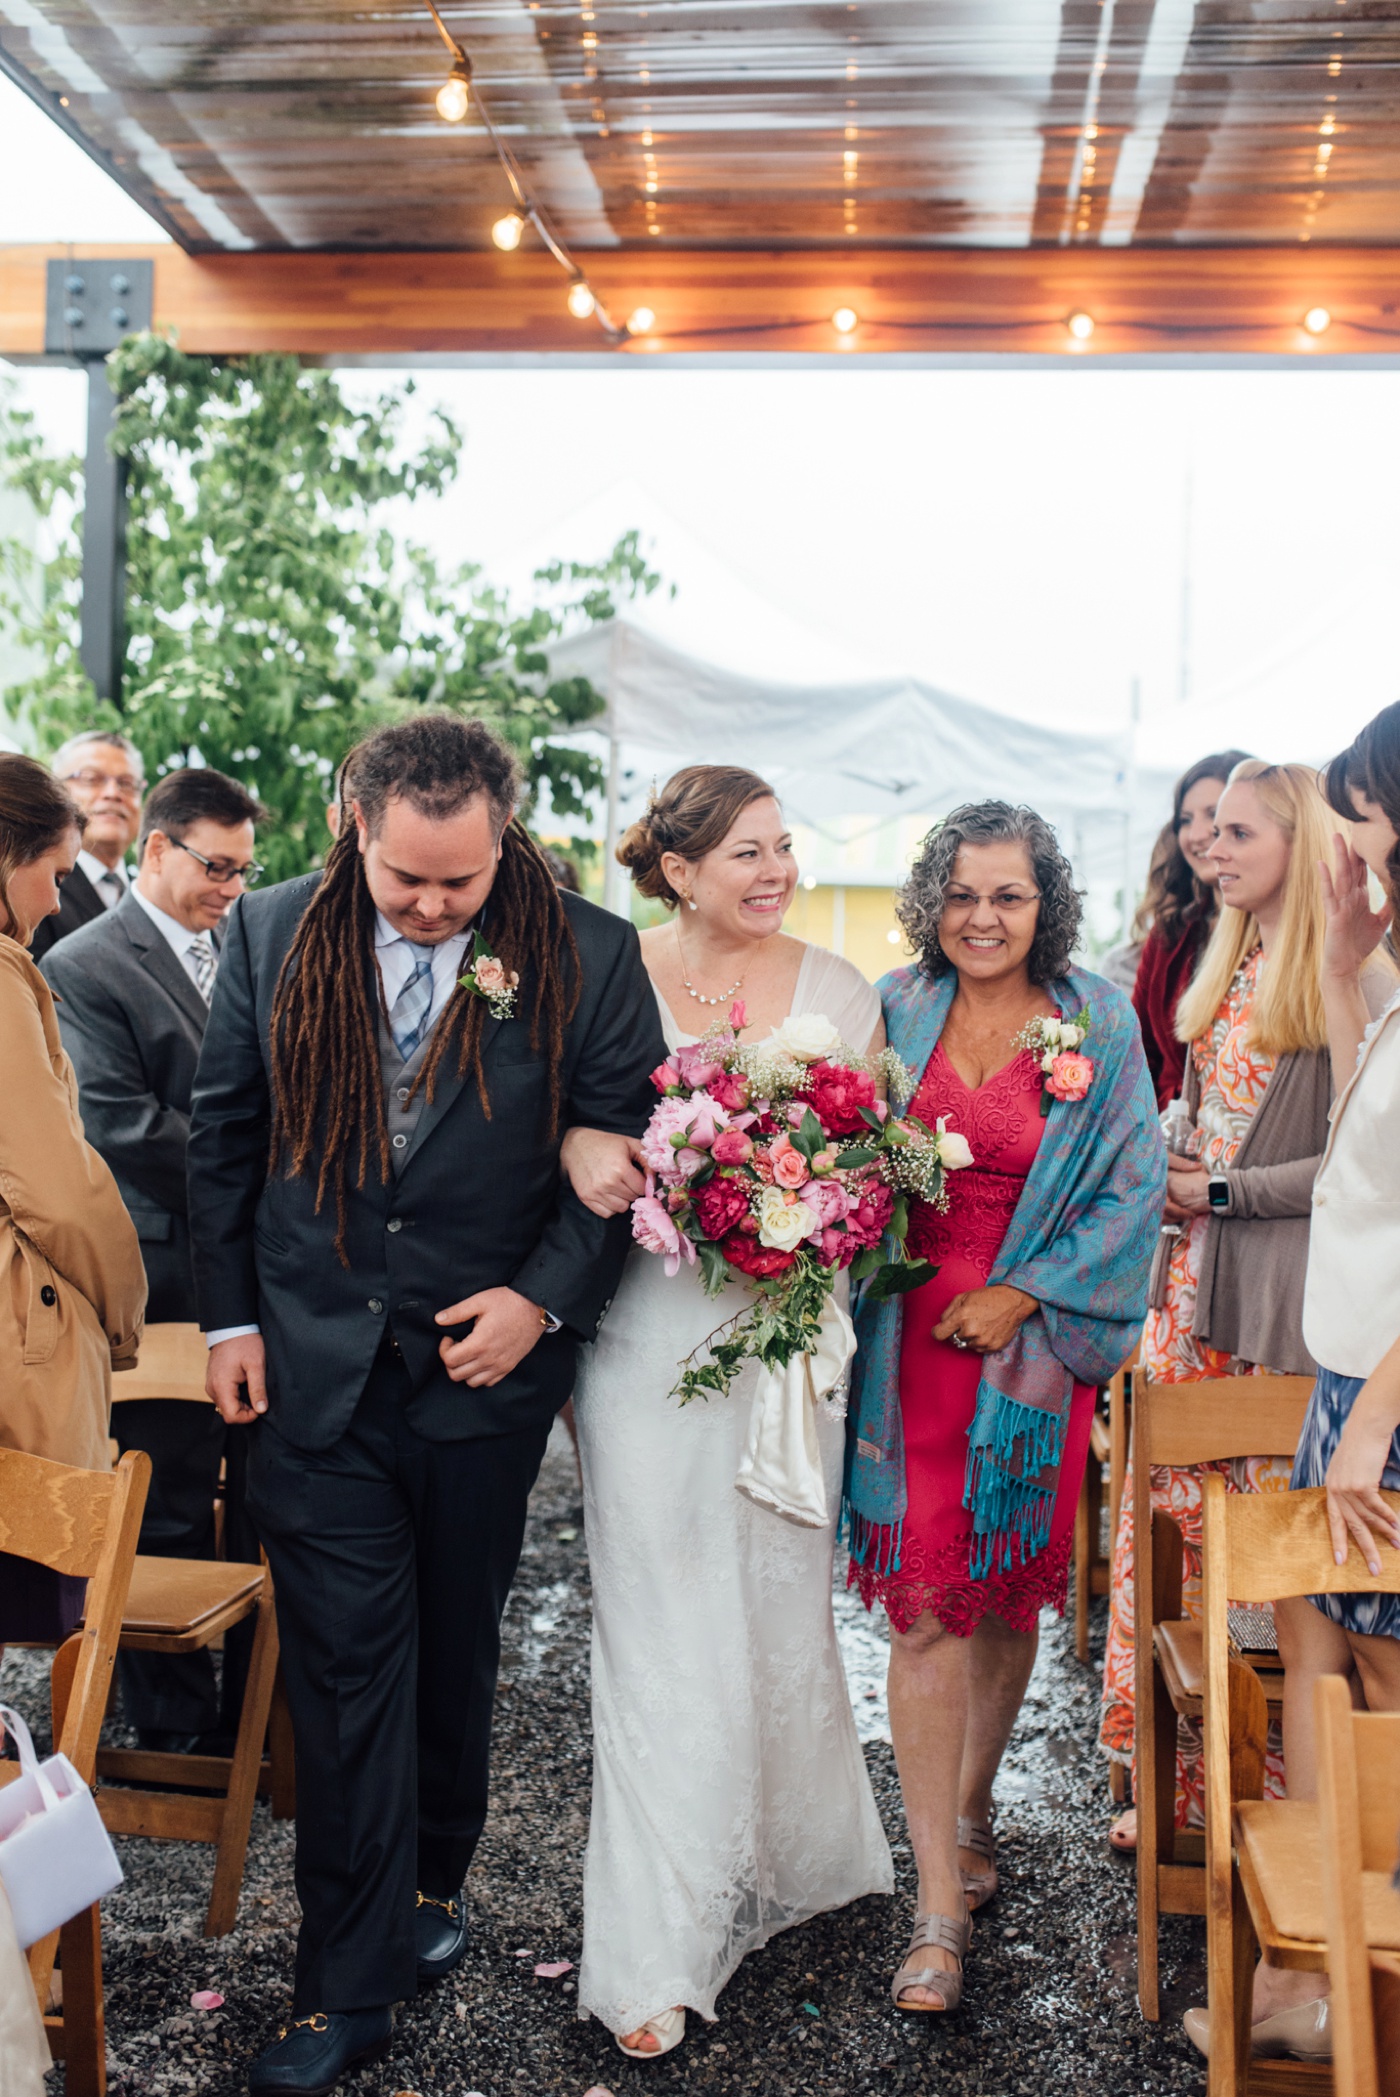 40 - Rachael + Paul - Greensgrow Farms Wedding - Philadelphia Wedding Photographer - Alison Dunn Photography